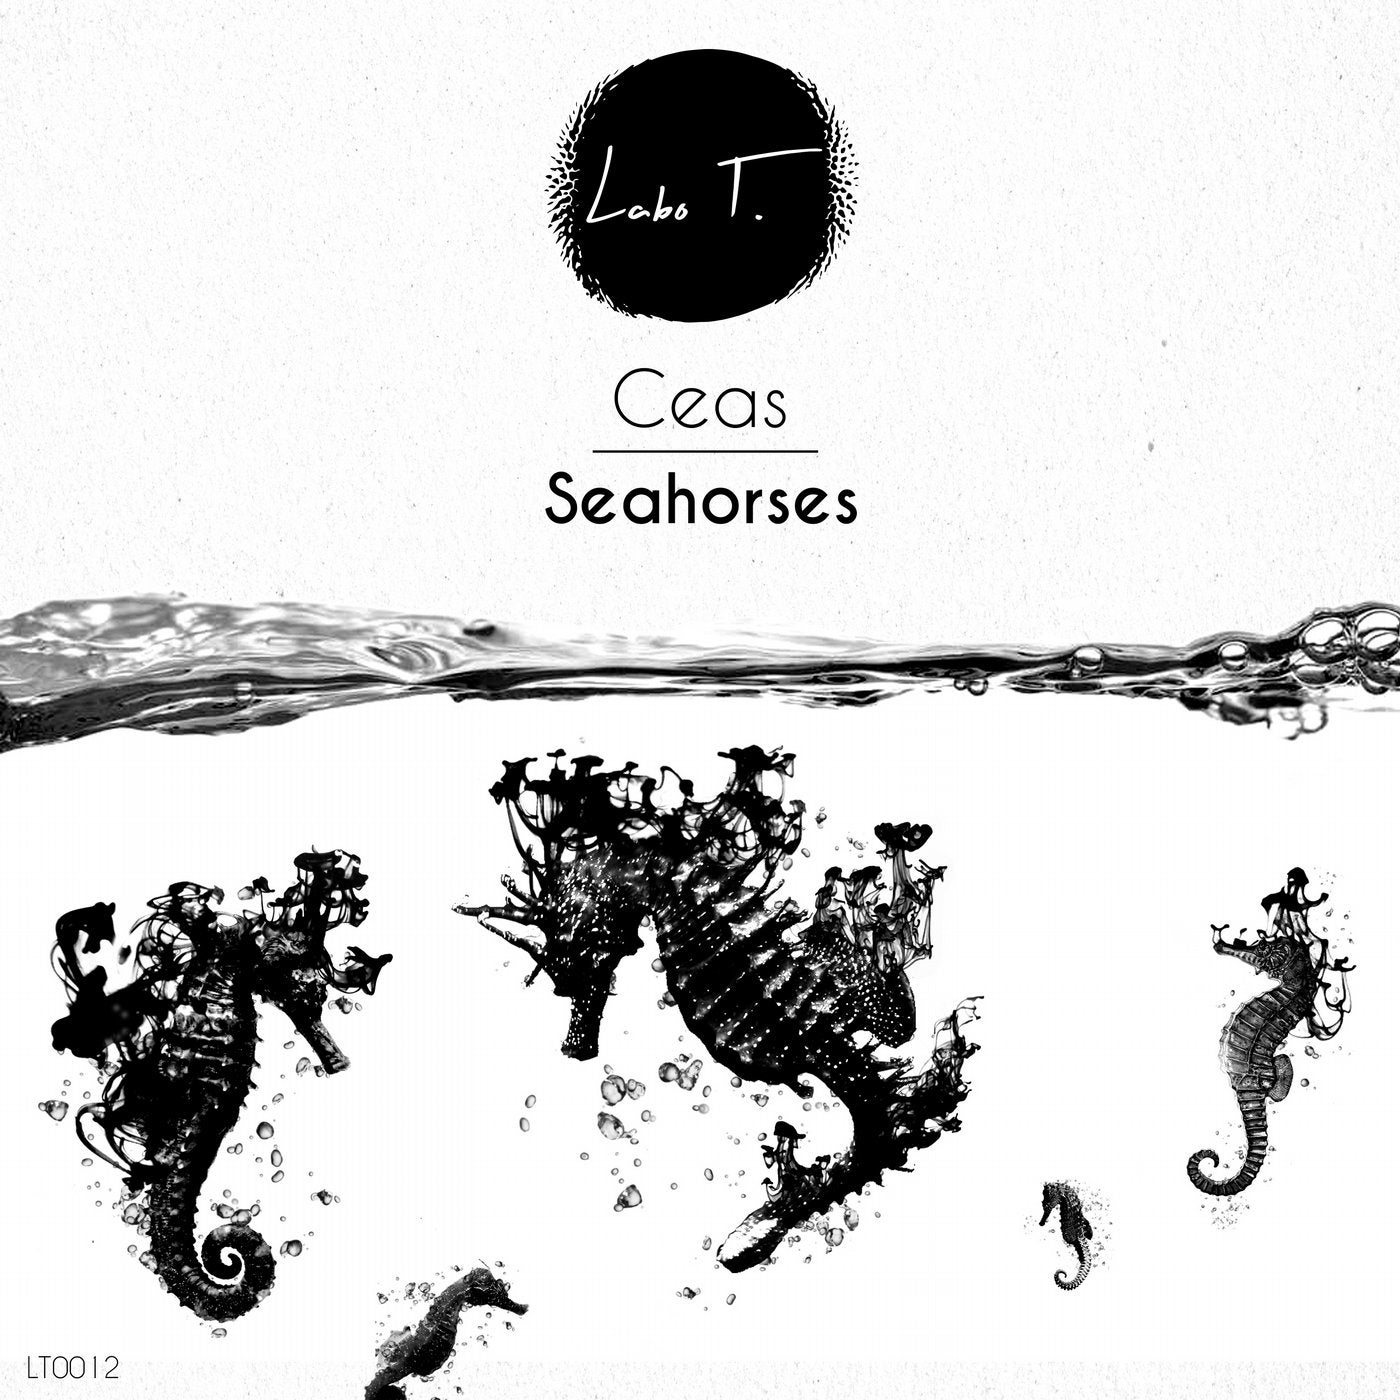 Seahorses (Original Mix) by Ceas on Beatport